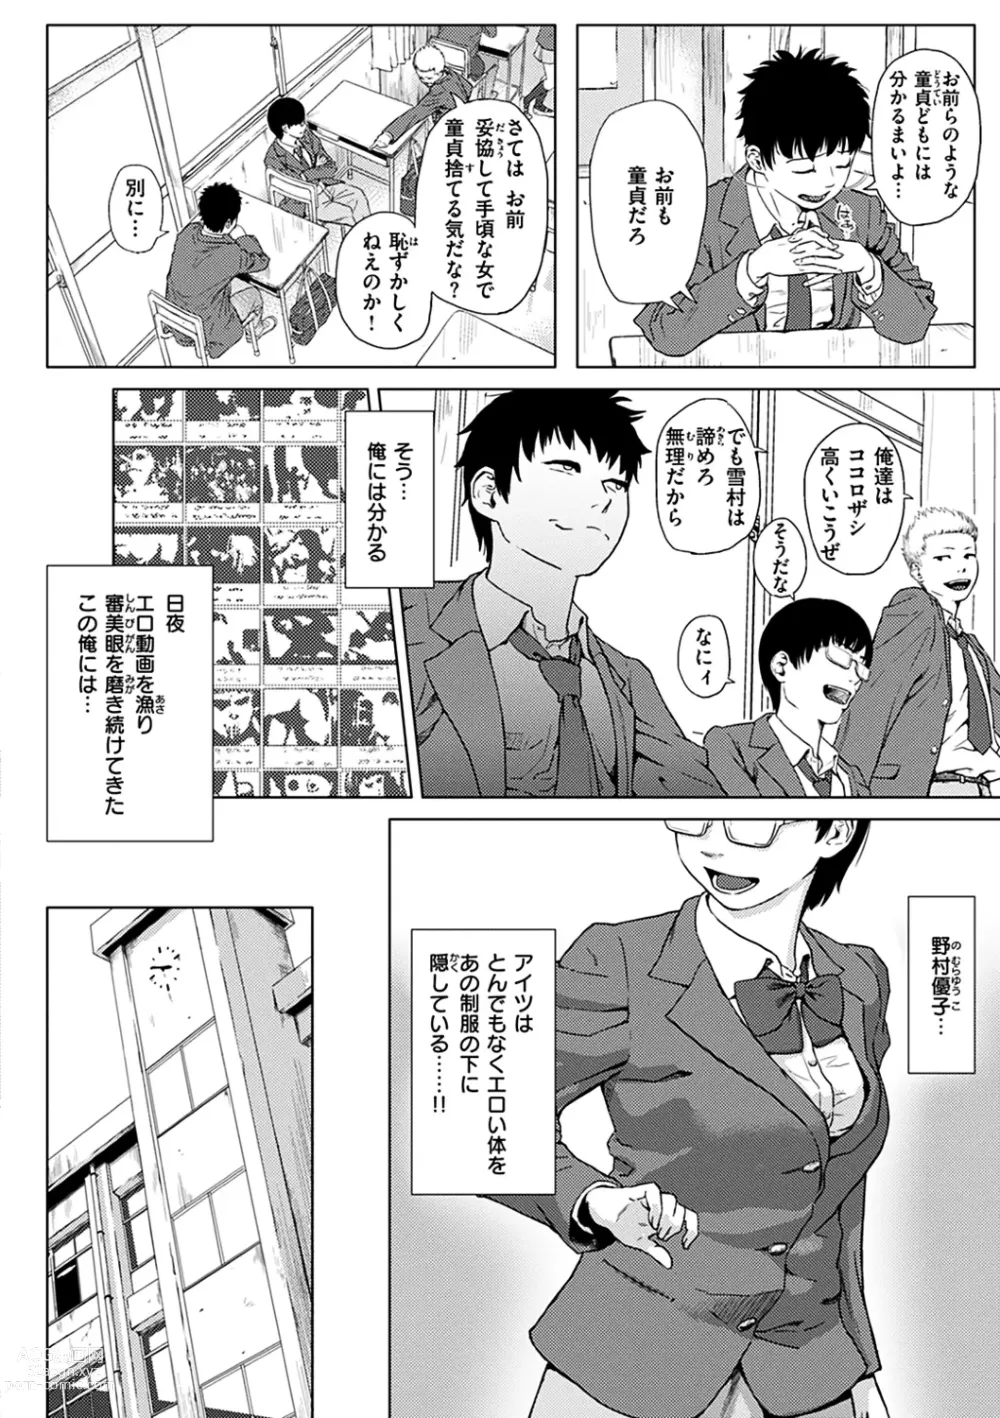 Page 8 of manga Kimi dake ni - I Only Love You...